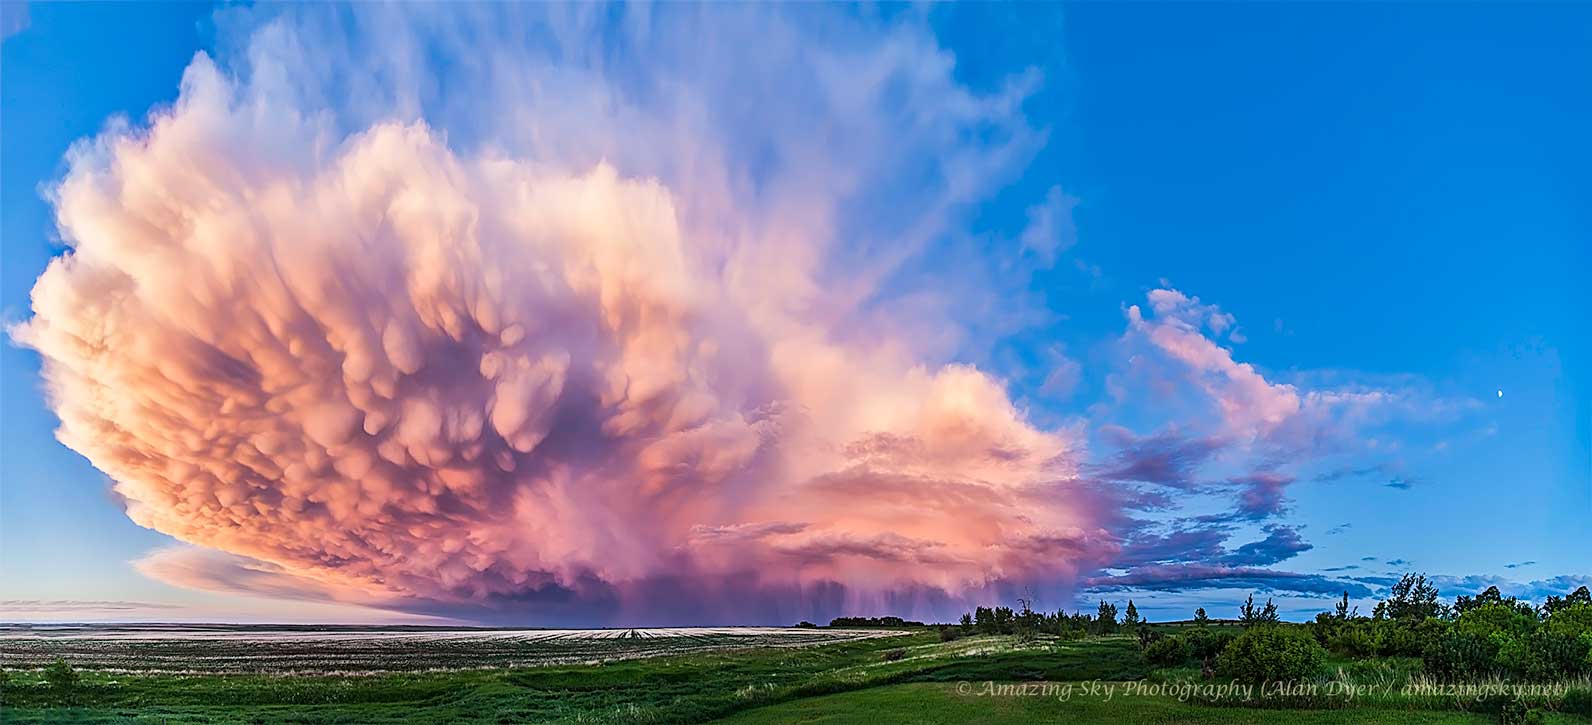 amazing cloud photography - Amazing Sky Photography Alan Dy zirgsky